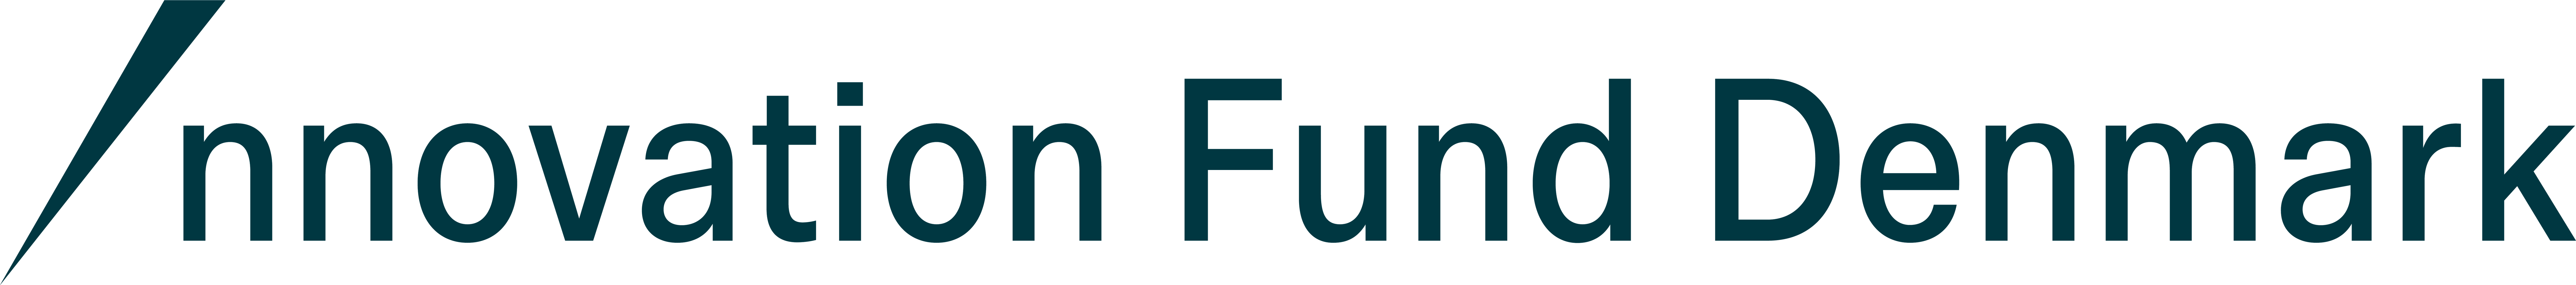 Innovationsfonden Logo ENG Teal RGB 1